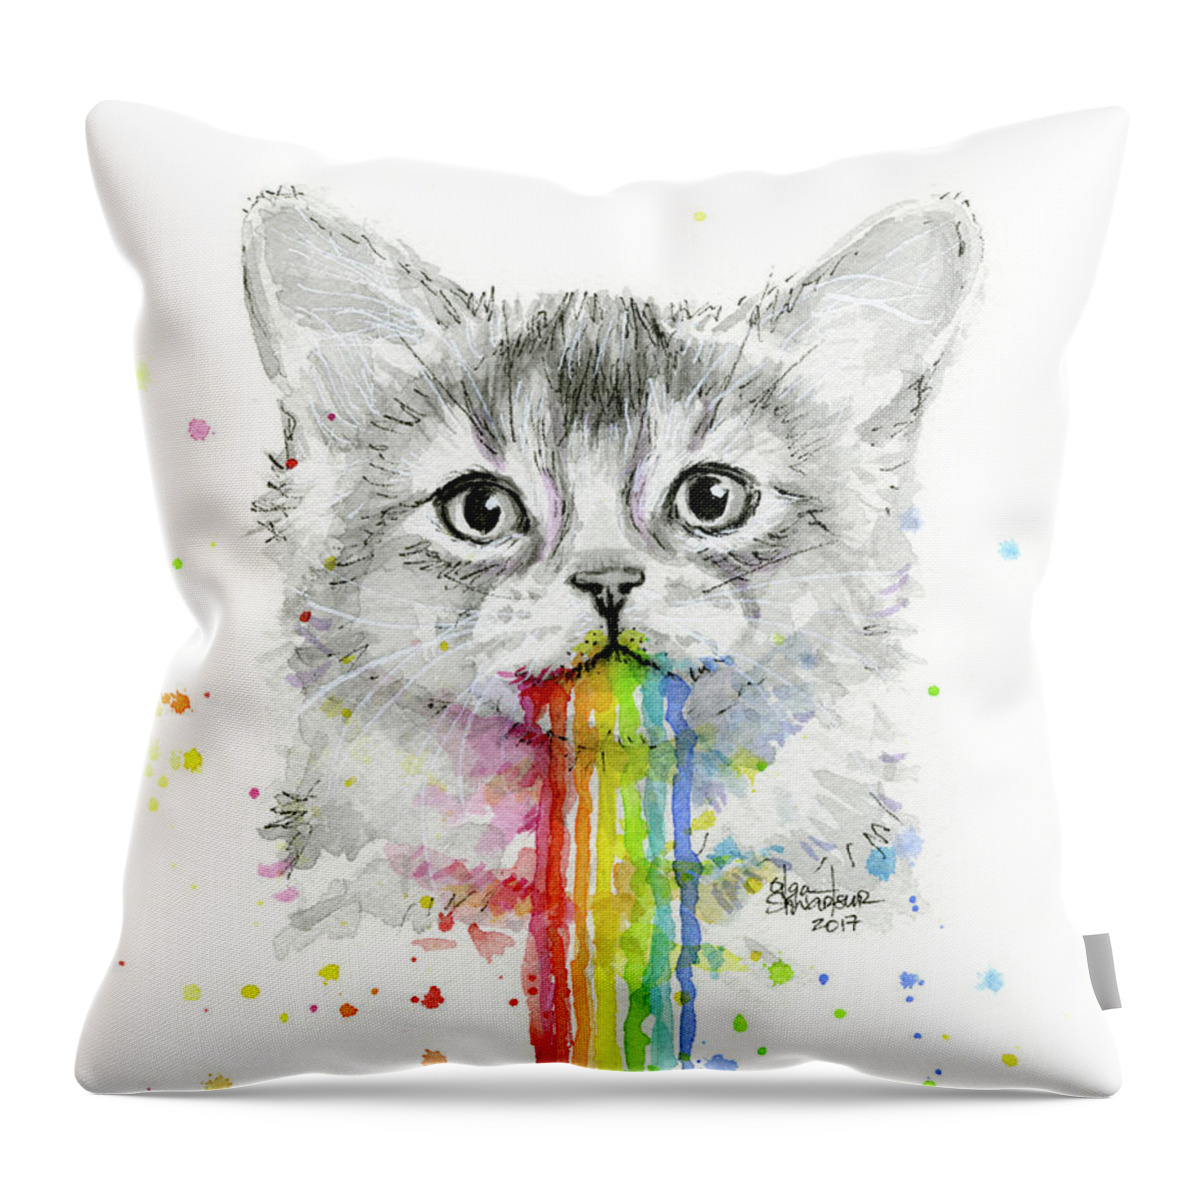 Kitten Throw Pillow featuring the painting Kitten Puking Rainbows by Olga Shvartsur